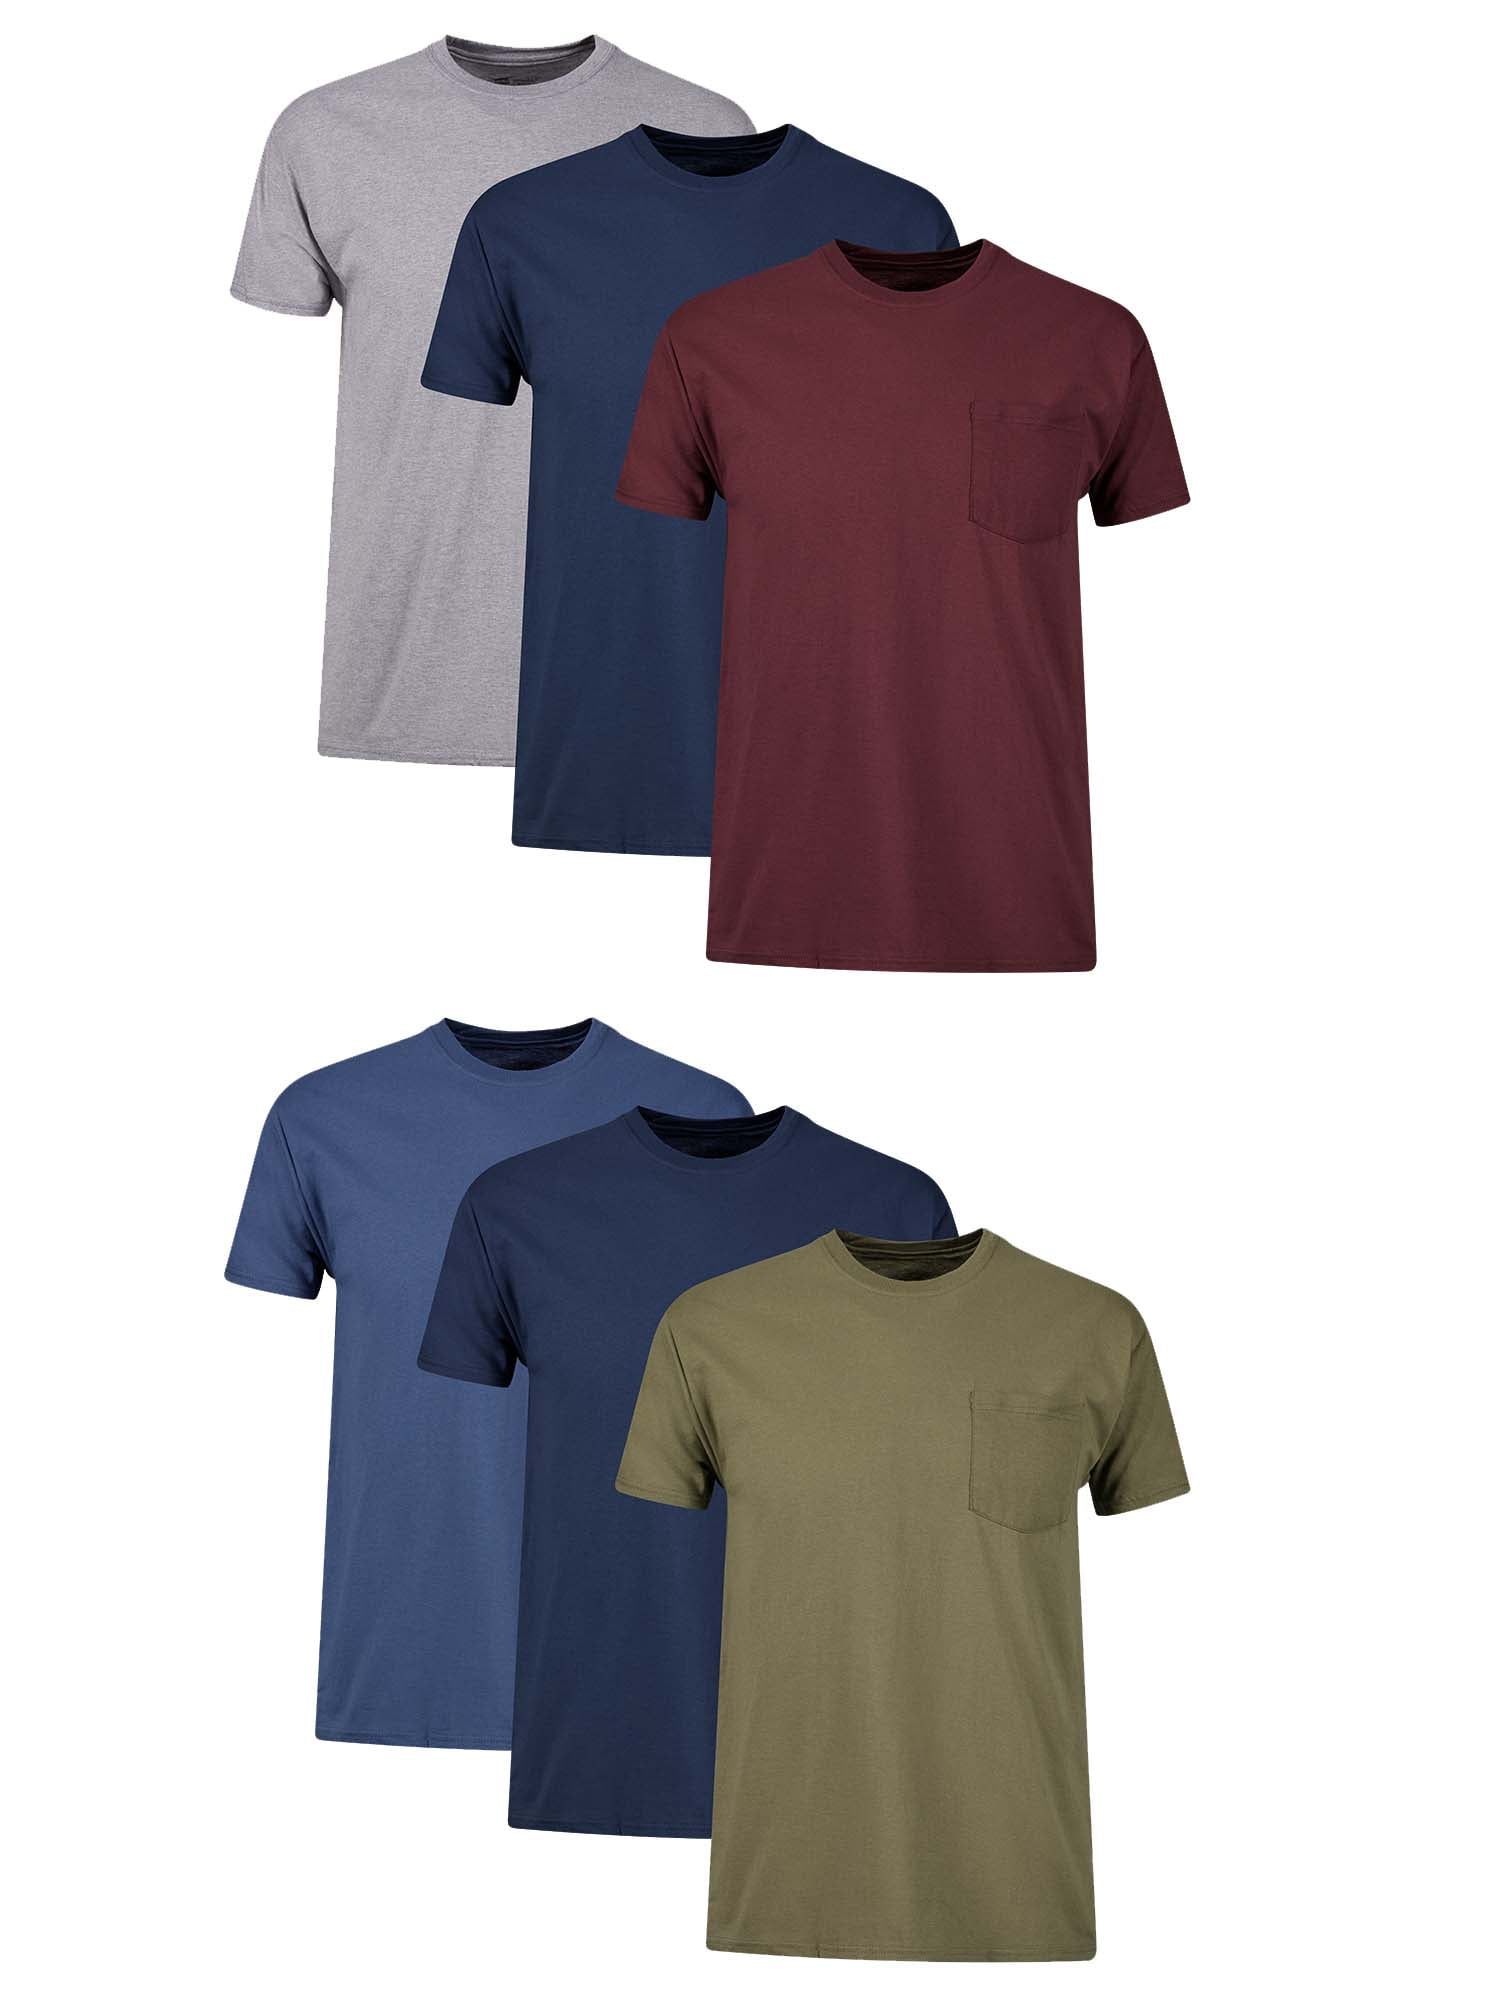 $75 Hanes Men White Crew Neck Cotton Undershirt T-Shirt Top Sleeve 5 Pack S